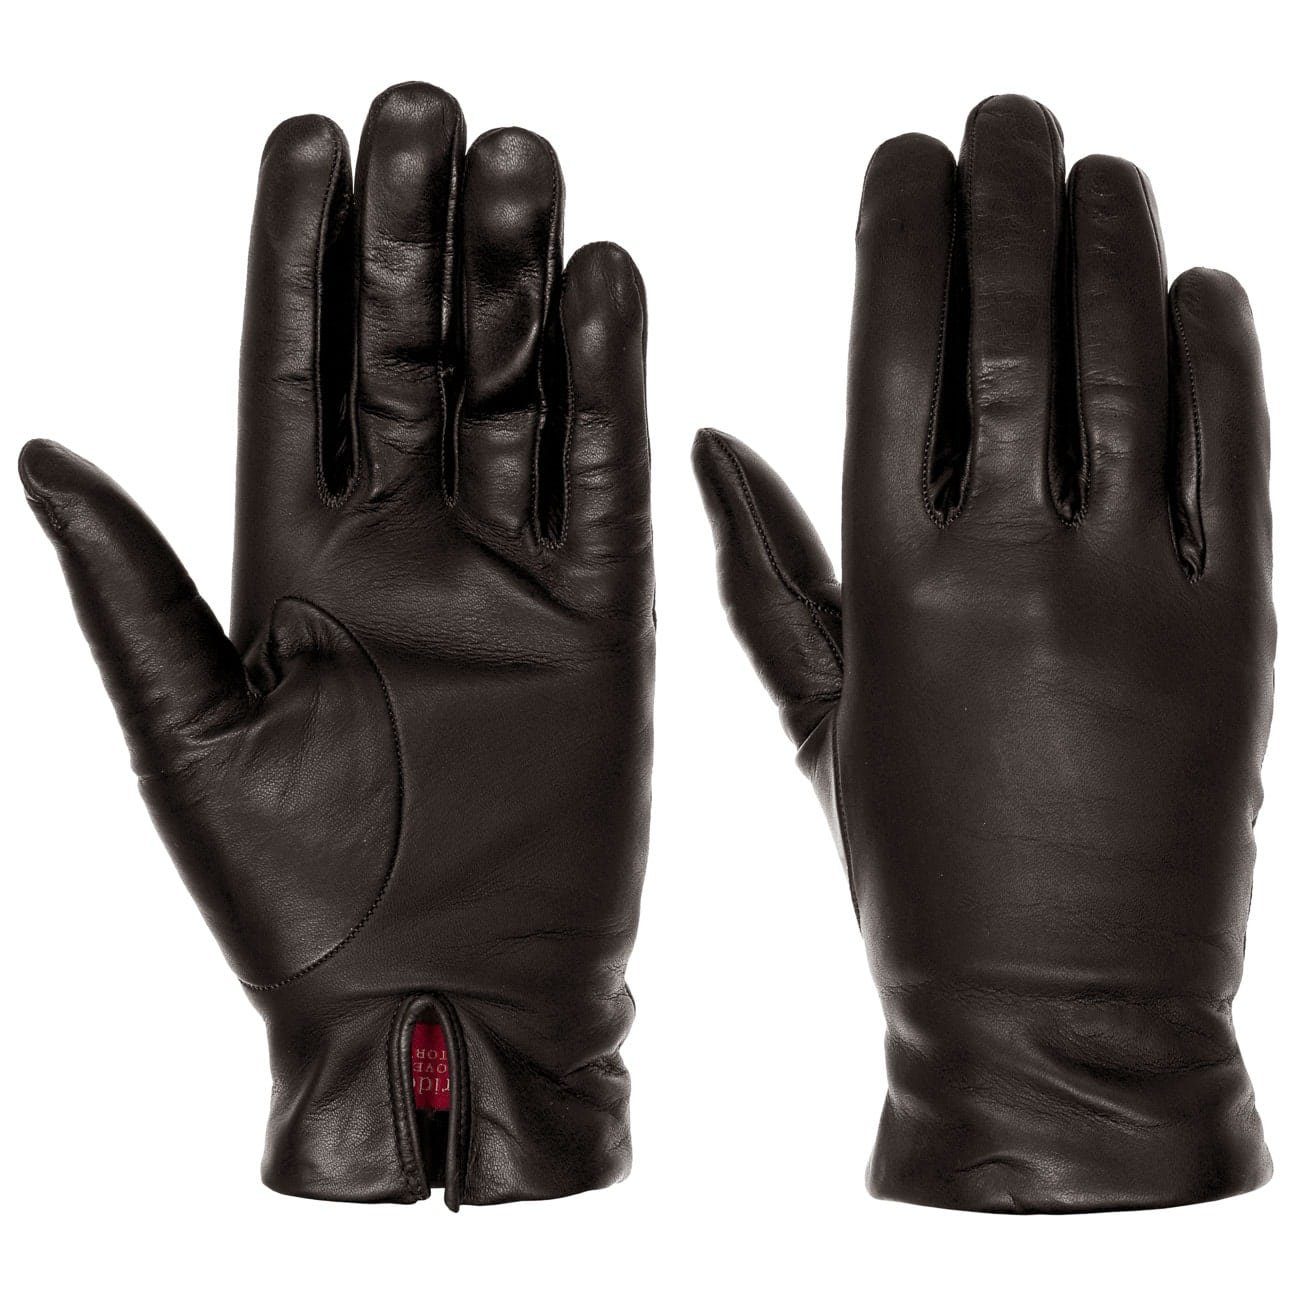 Caridei Lederhandschuhe Fingerhandschuhe mit Futter, Made in Italy schwarz